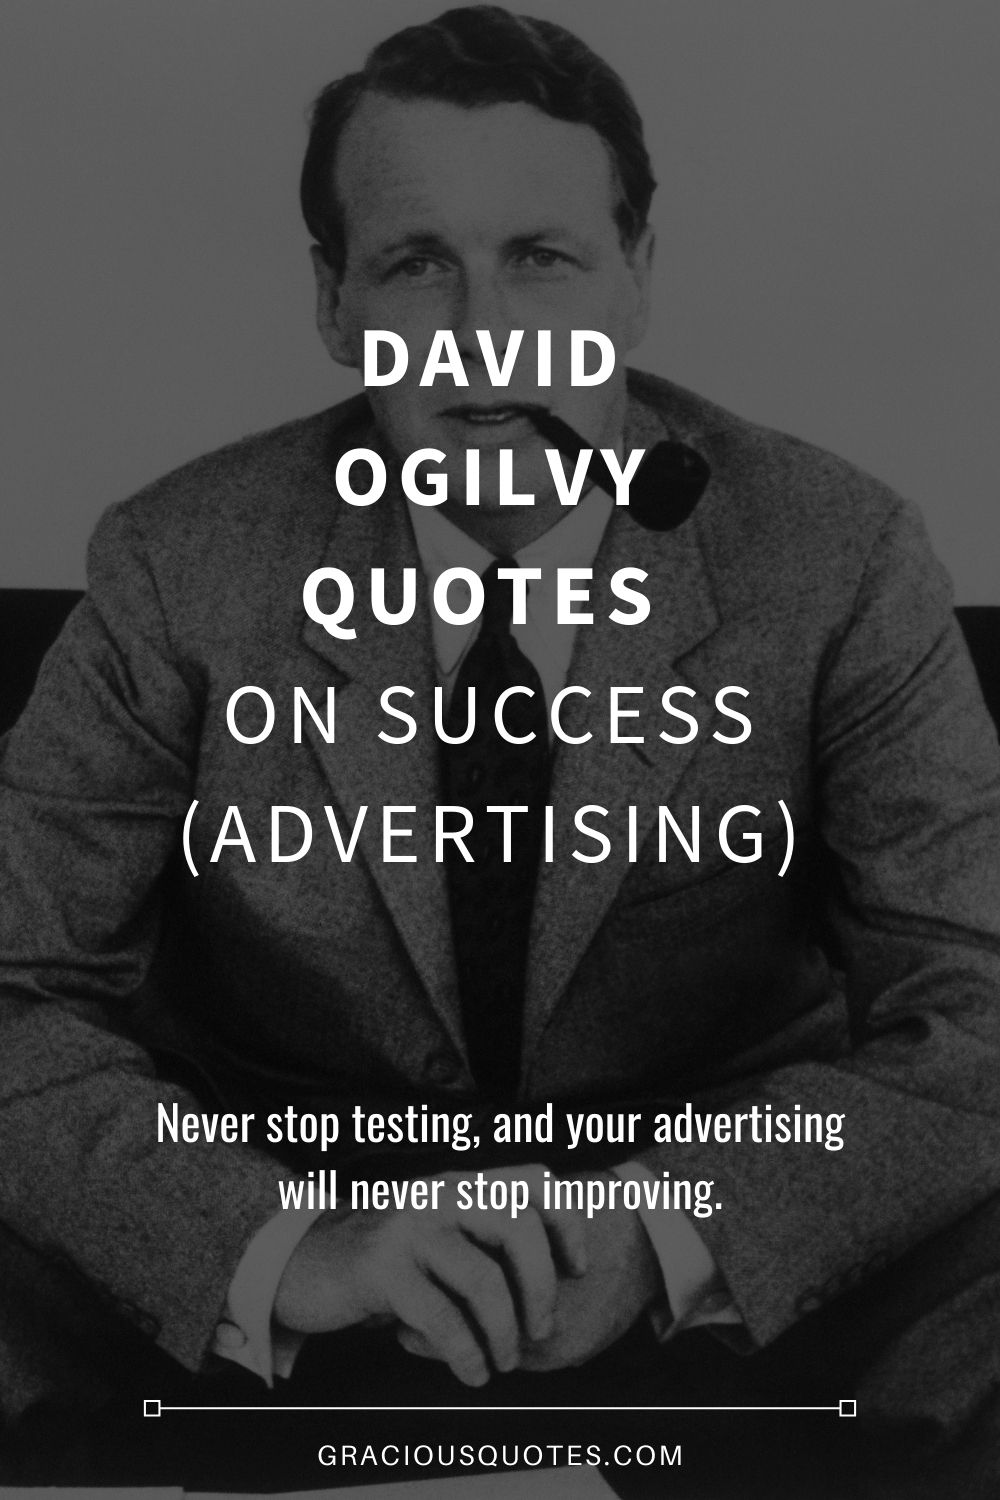 David Ogilvy Quotes on Success (ADVERTISING) - Gracious Quotes